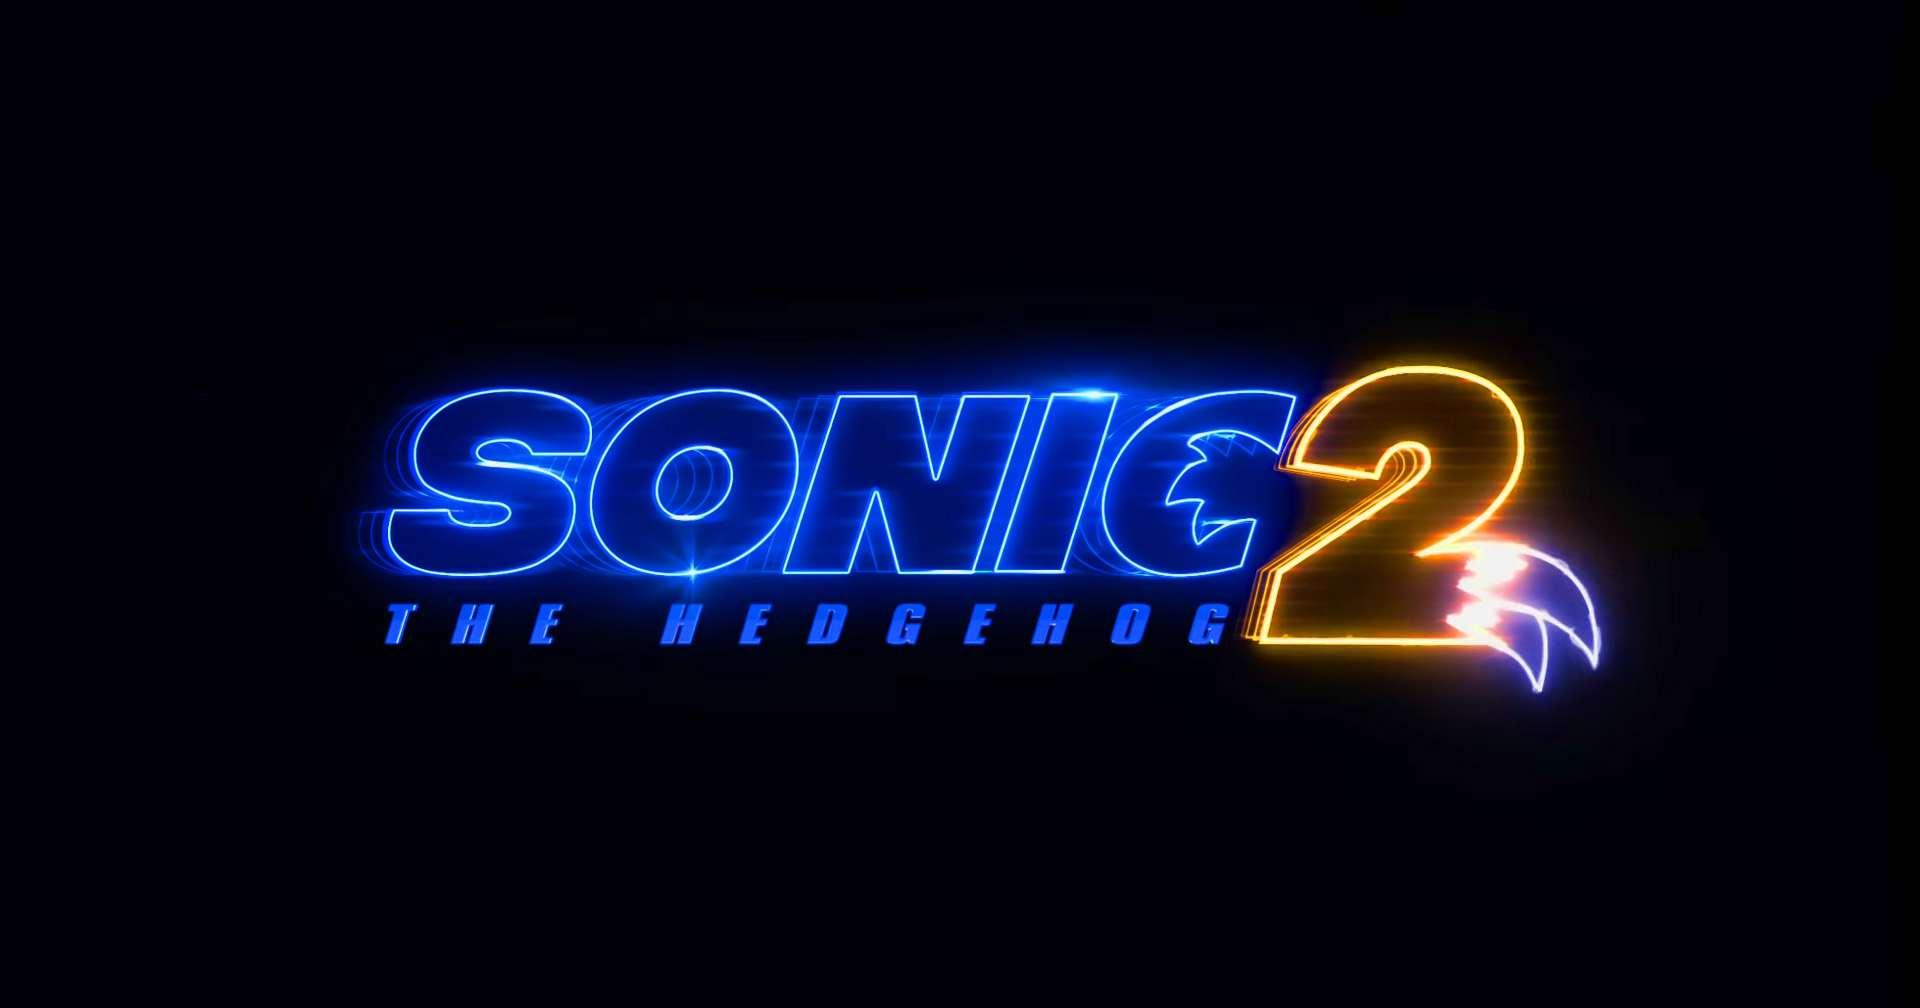 Paramount เผยกำหนดฉาย Sonic the Hedgehog 2 : มีเจ้า Tails มาเสริมทัพด้วย